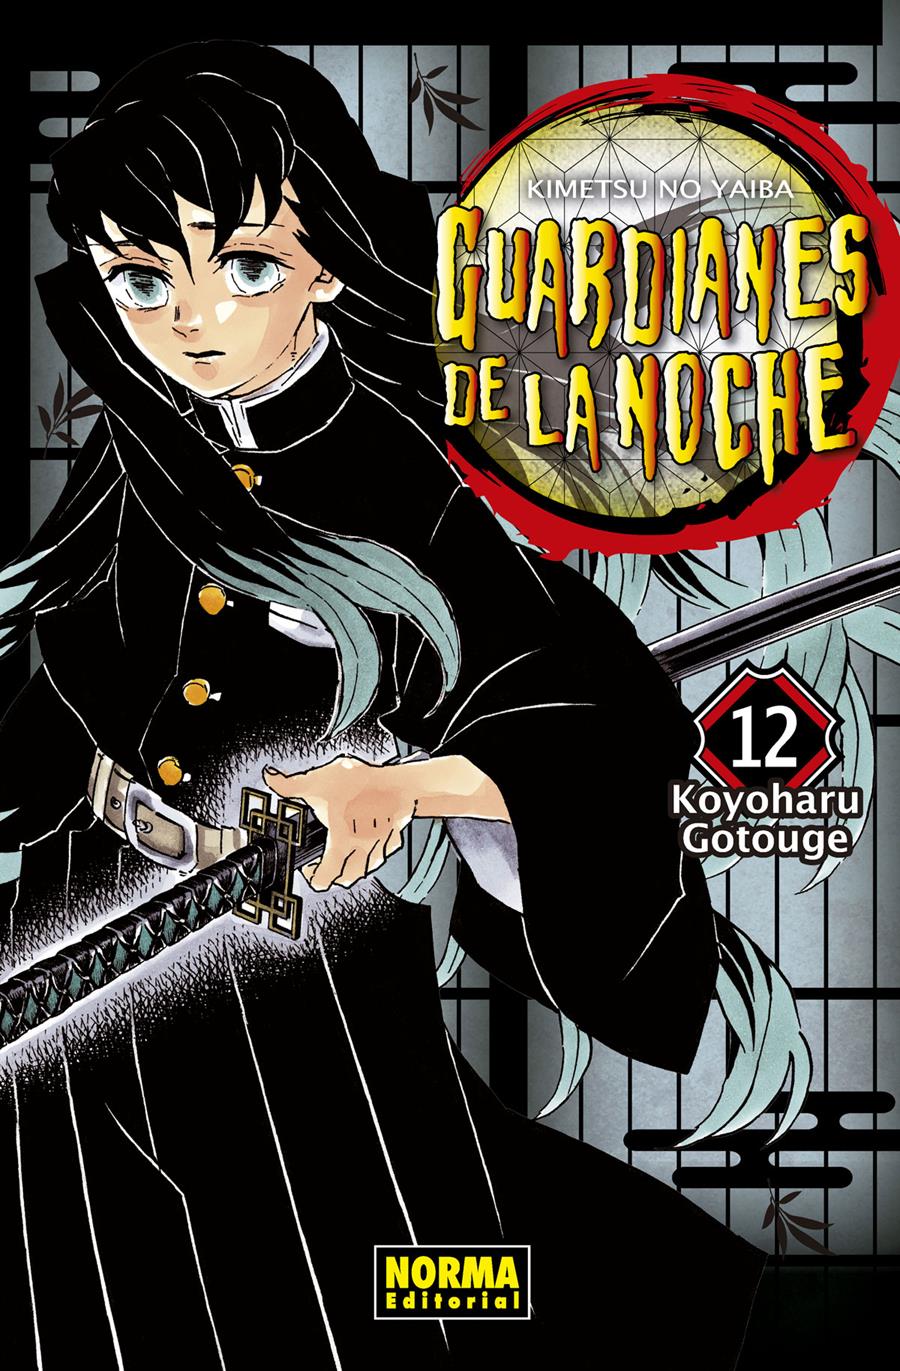 Guardianes de la noche 12 | N0820-NOR14 | Koyoharu Gotouge | Terra de Còmic - Tu tienda de cómics online especializada en cómics, manga y merchandising